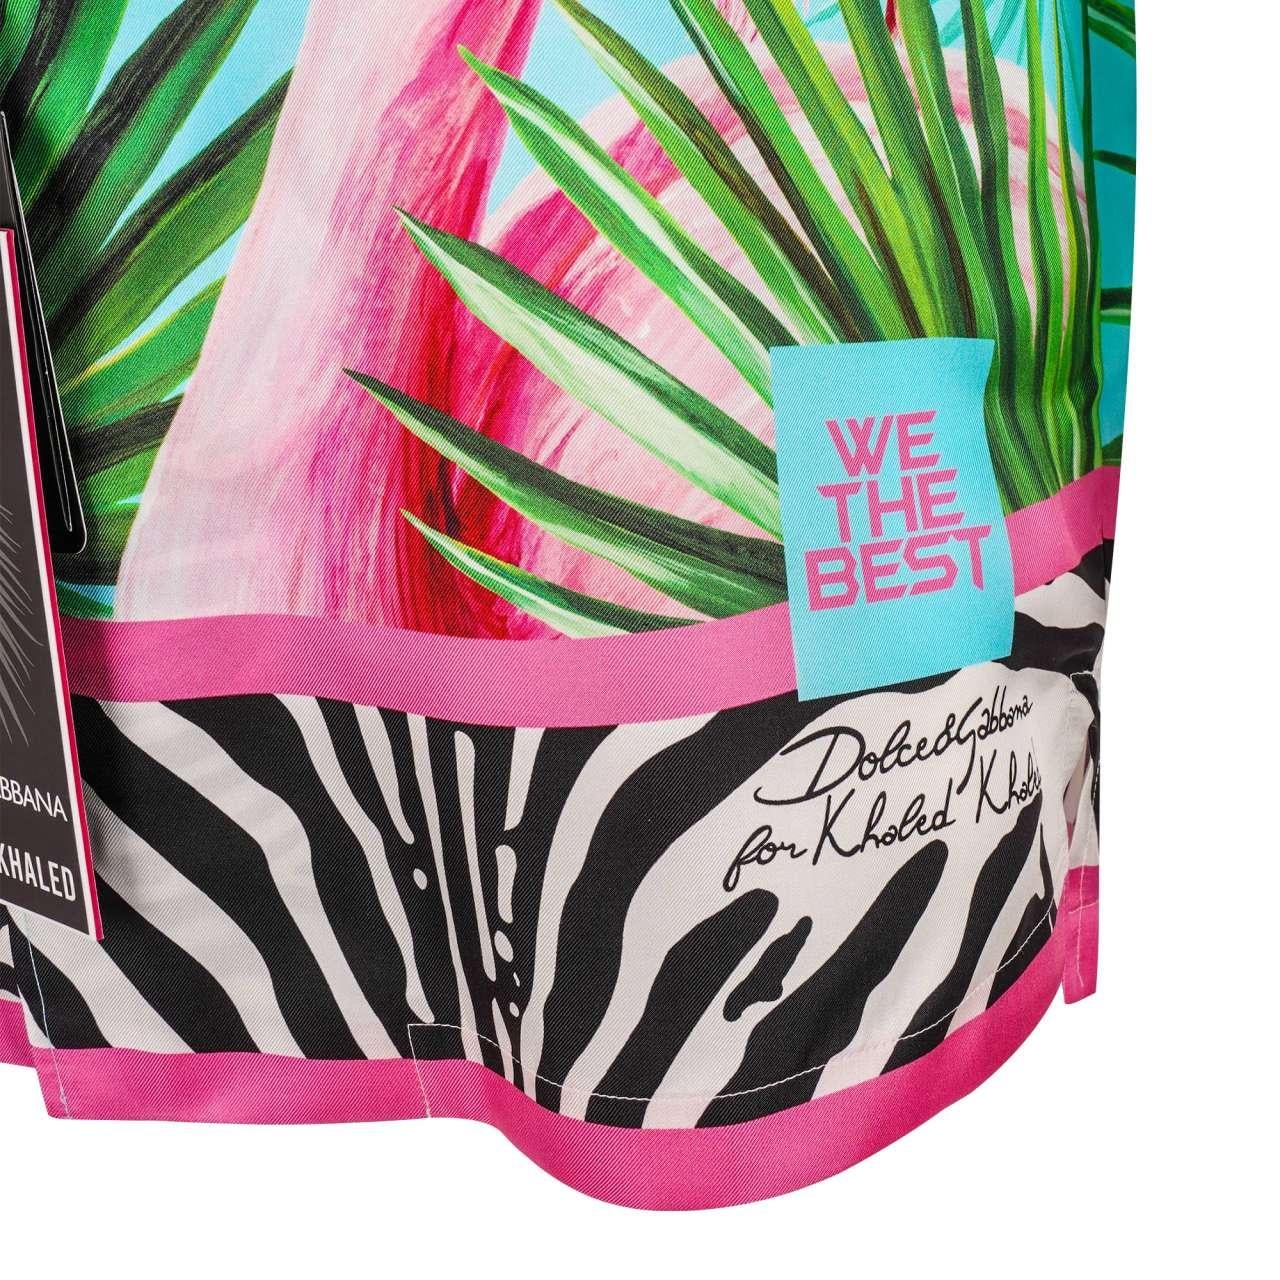 Women's D&G - DJ Khaled Silk Flamingo Zebra Shirt Blouse with Sunglasses and CD 48 For Sale